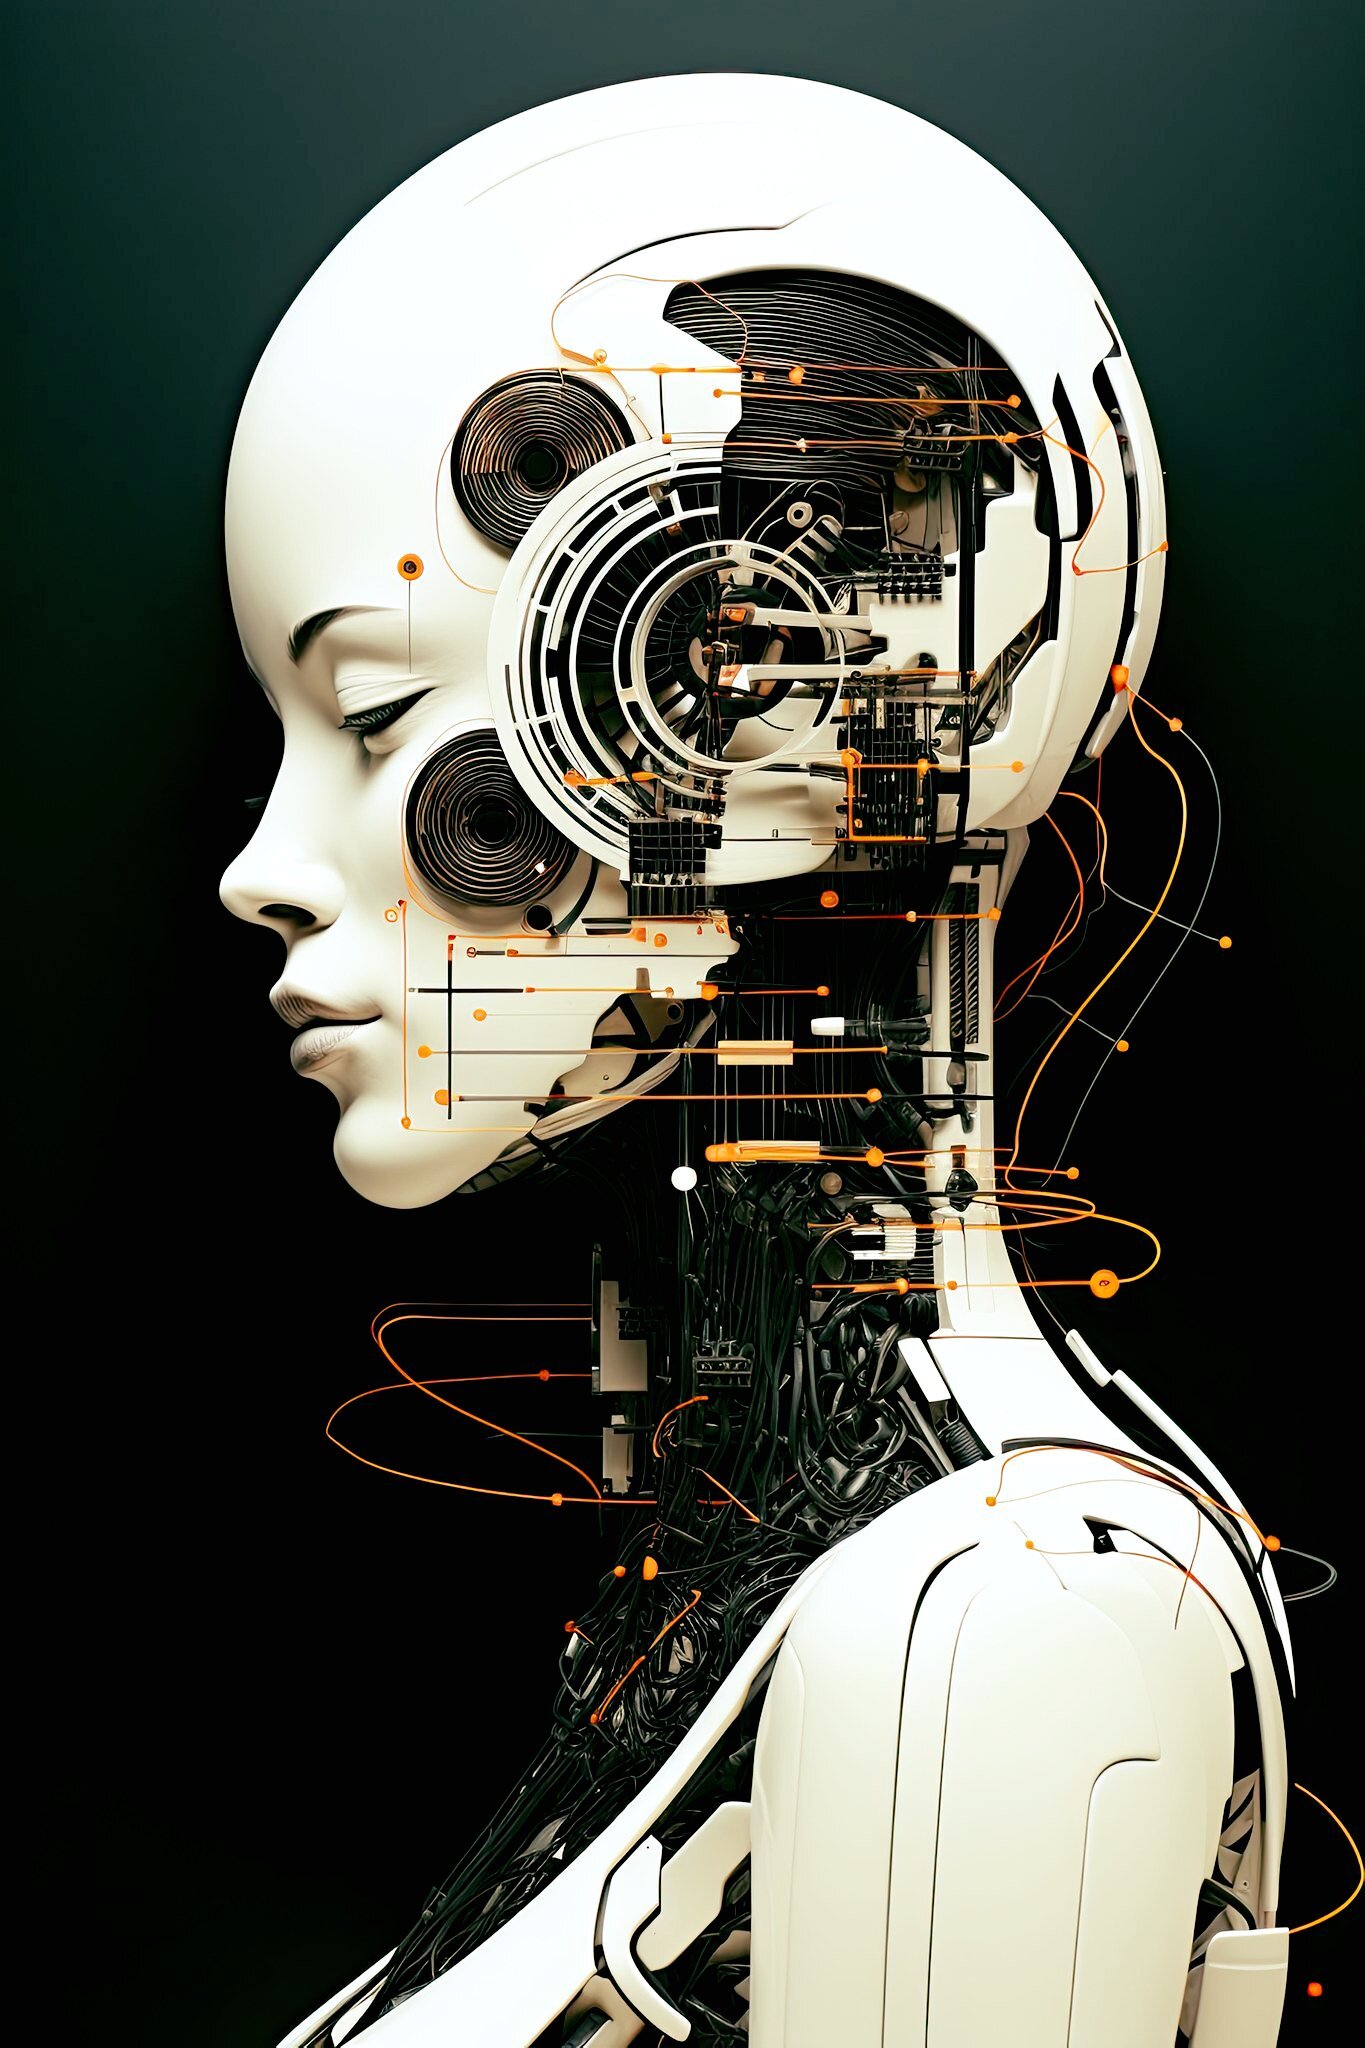 Model APA pro-Serie 9T through testing.
.
.
.
#genaigirl #planetbpop #scifiart #sciencefictionart #futuristicart
#mechart #dystopianart
#robotics #bionics #love #exmachina #utopiaart #technoart #robots #uncannyvalley
#futurismart #surreal
#procedural